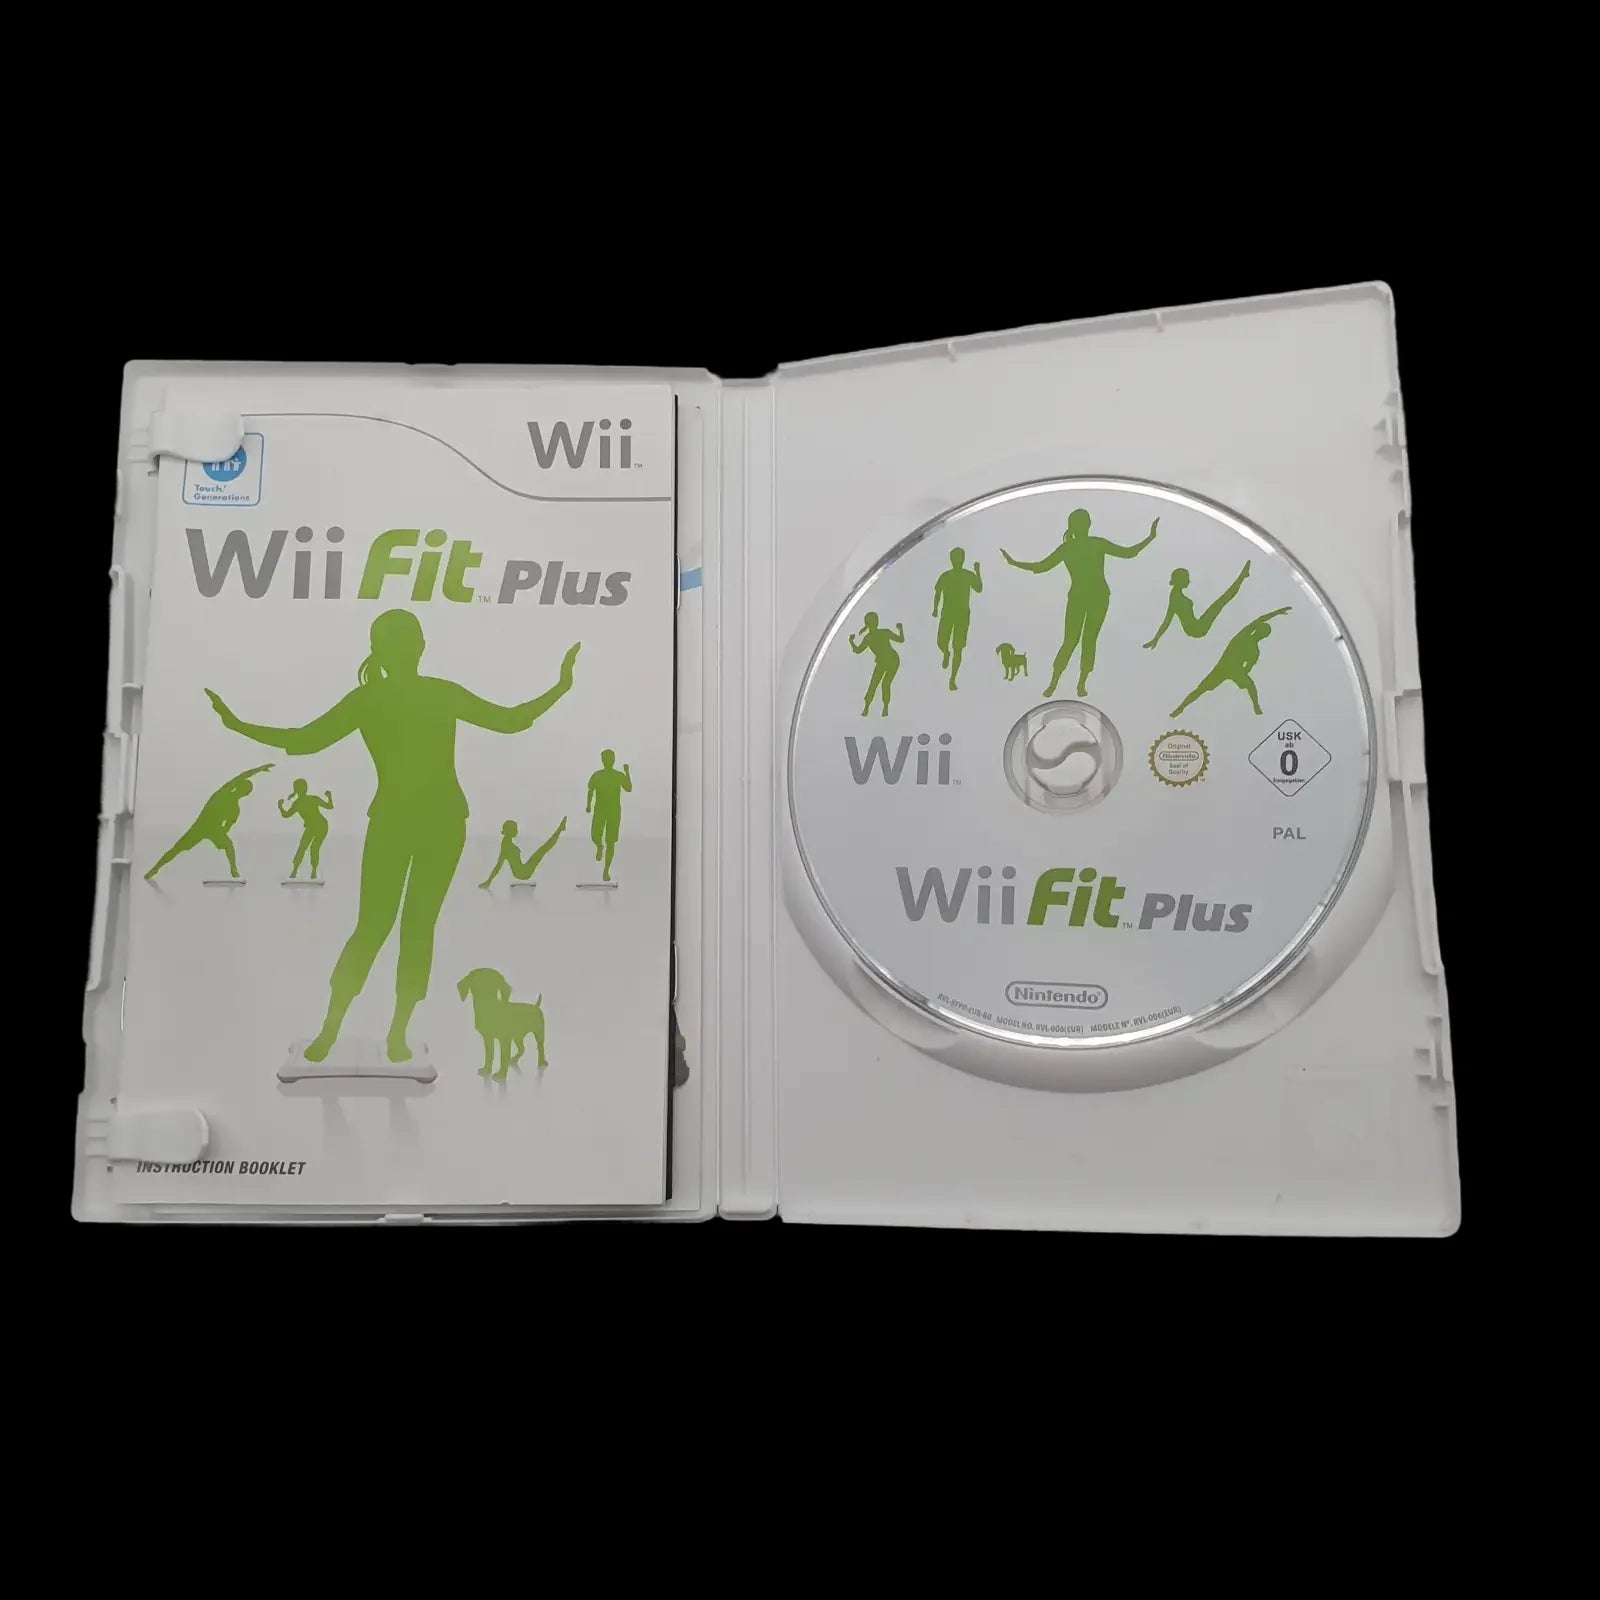 Wii Fit Plus Nintendo 2009 Video Game Cib - Games - 3 - 2398